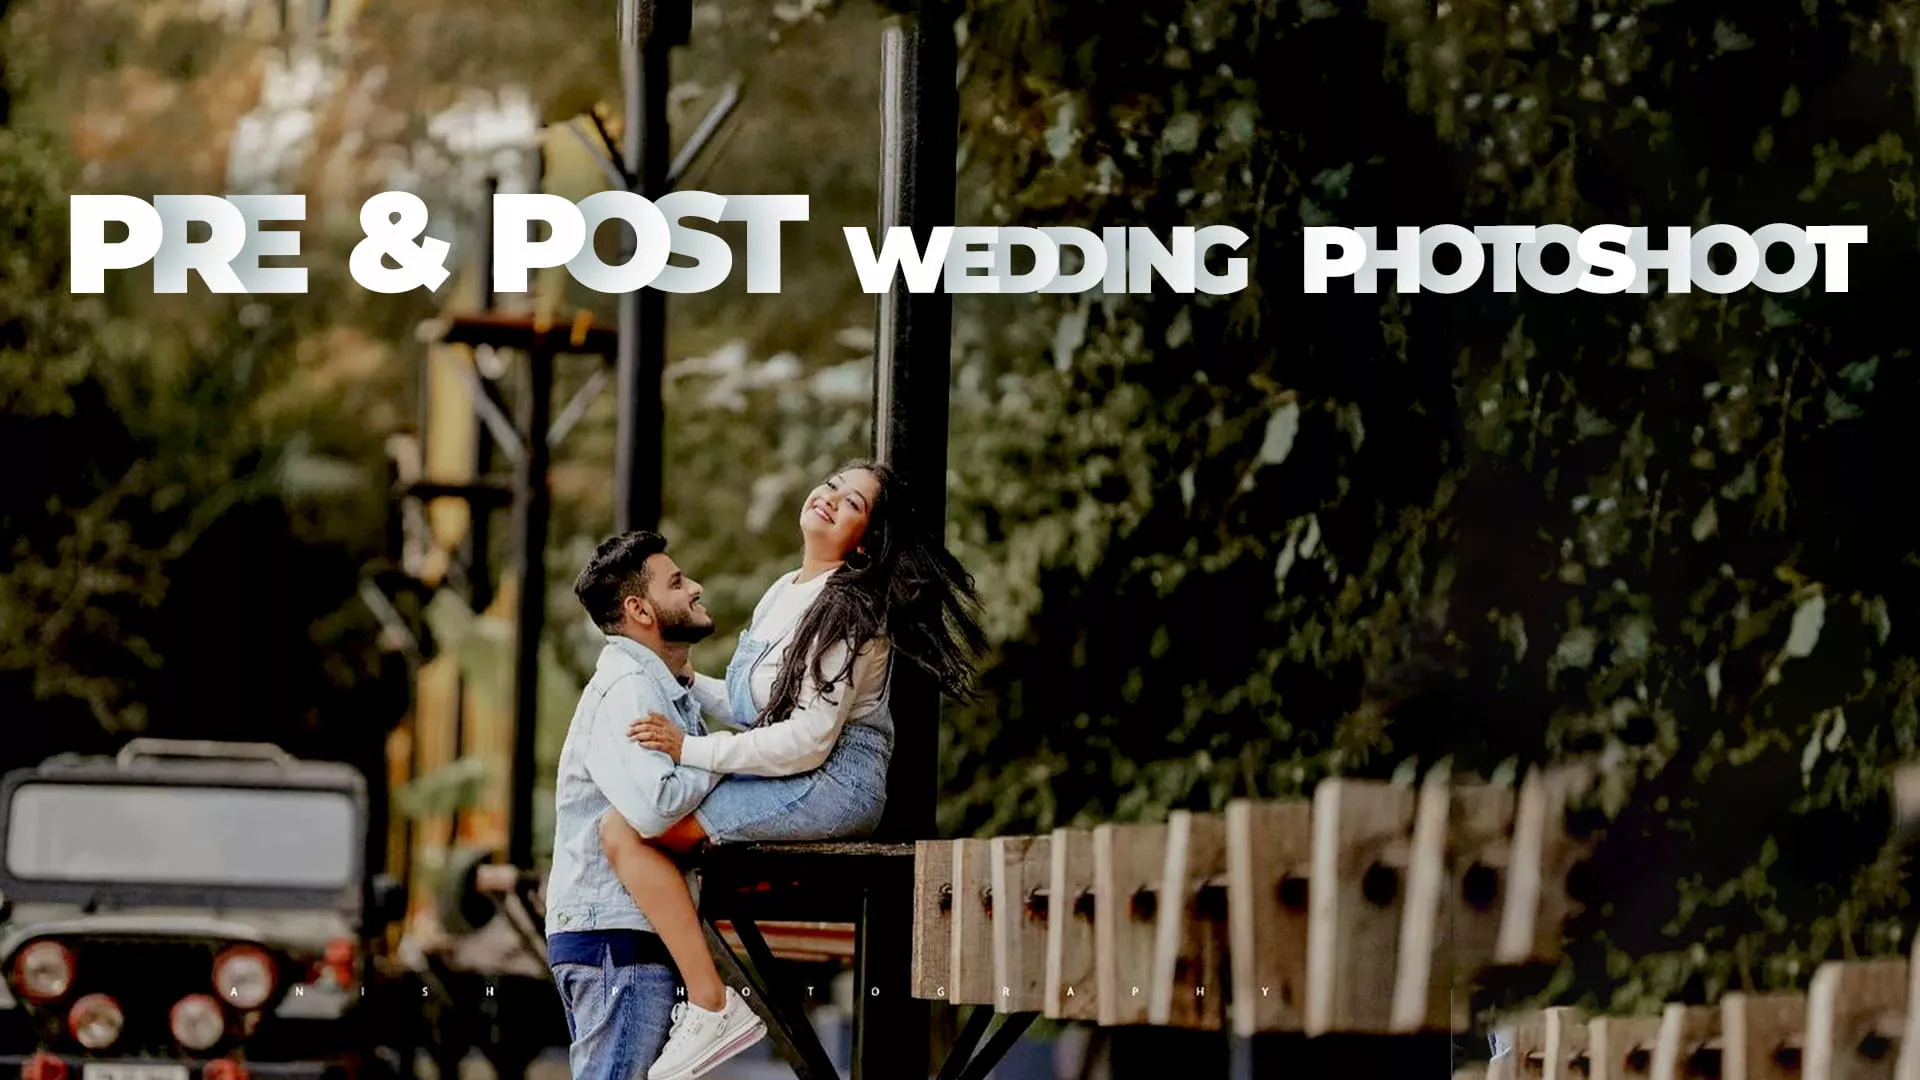 Pre & Post wedding Shoot in SR Jungle Resort